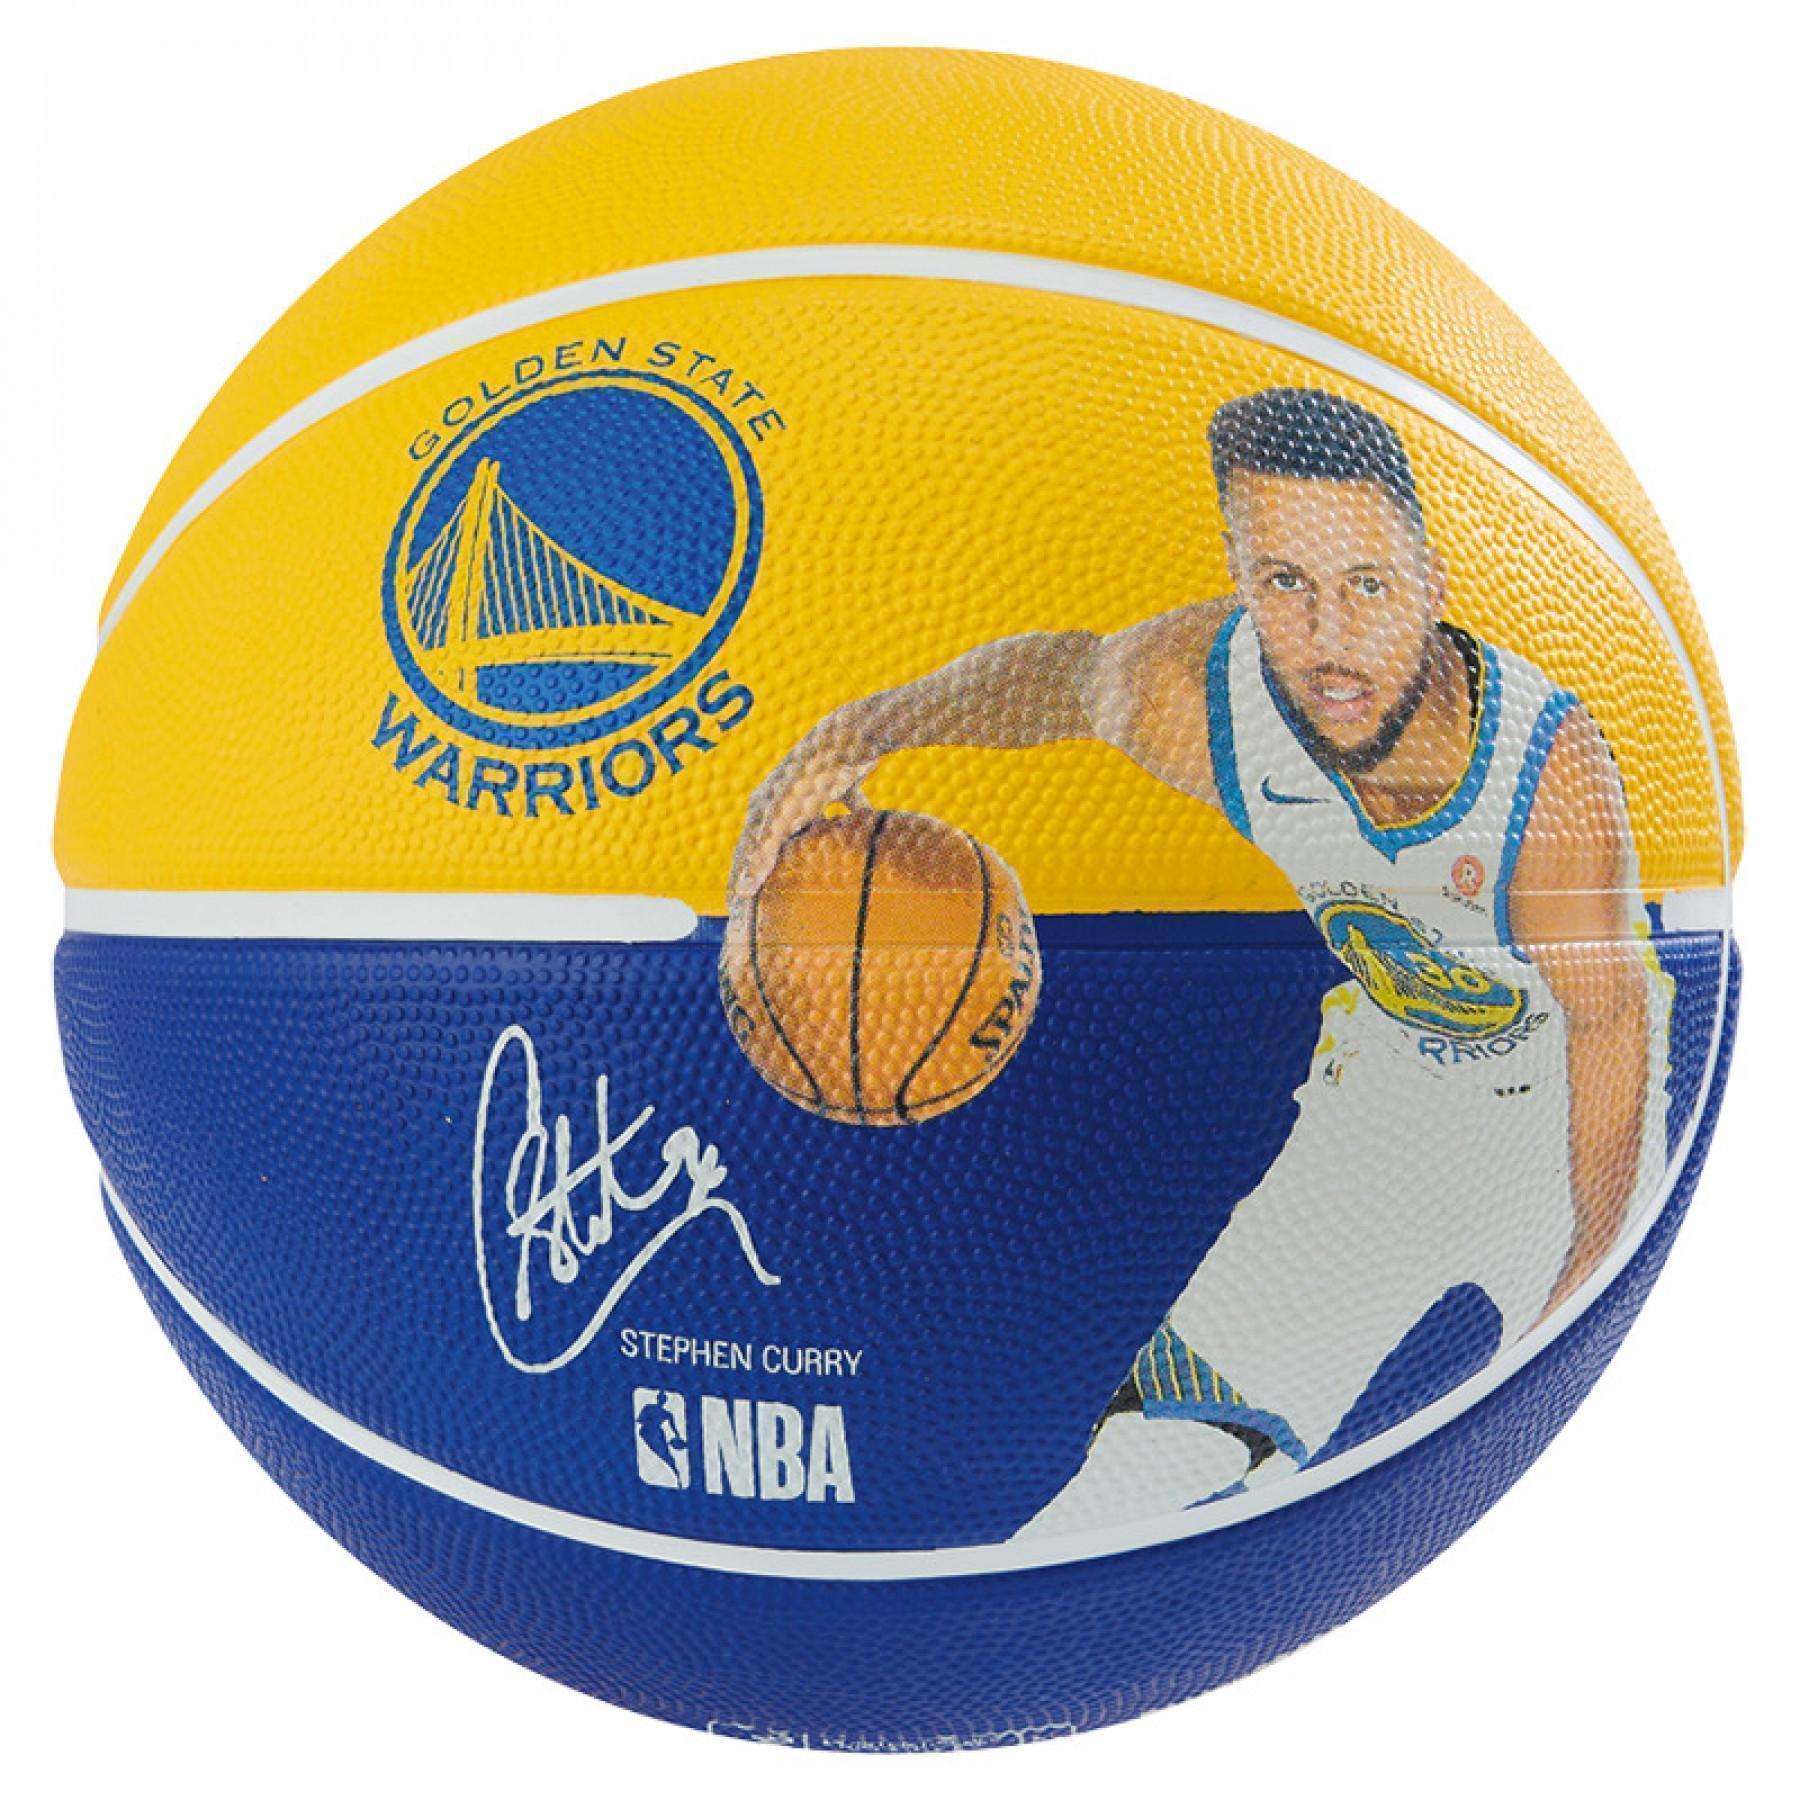 Balon Spalding NBA Player Stephen Curry (83-866z)